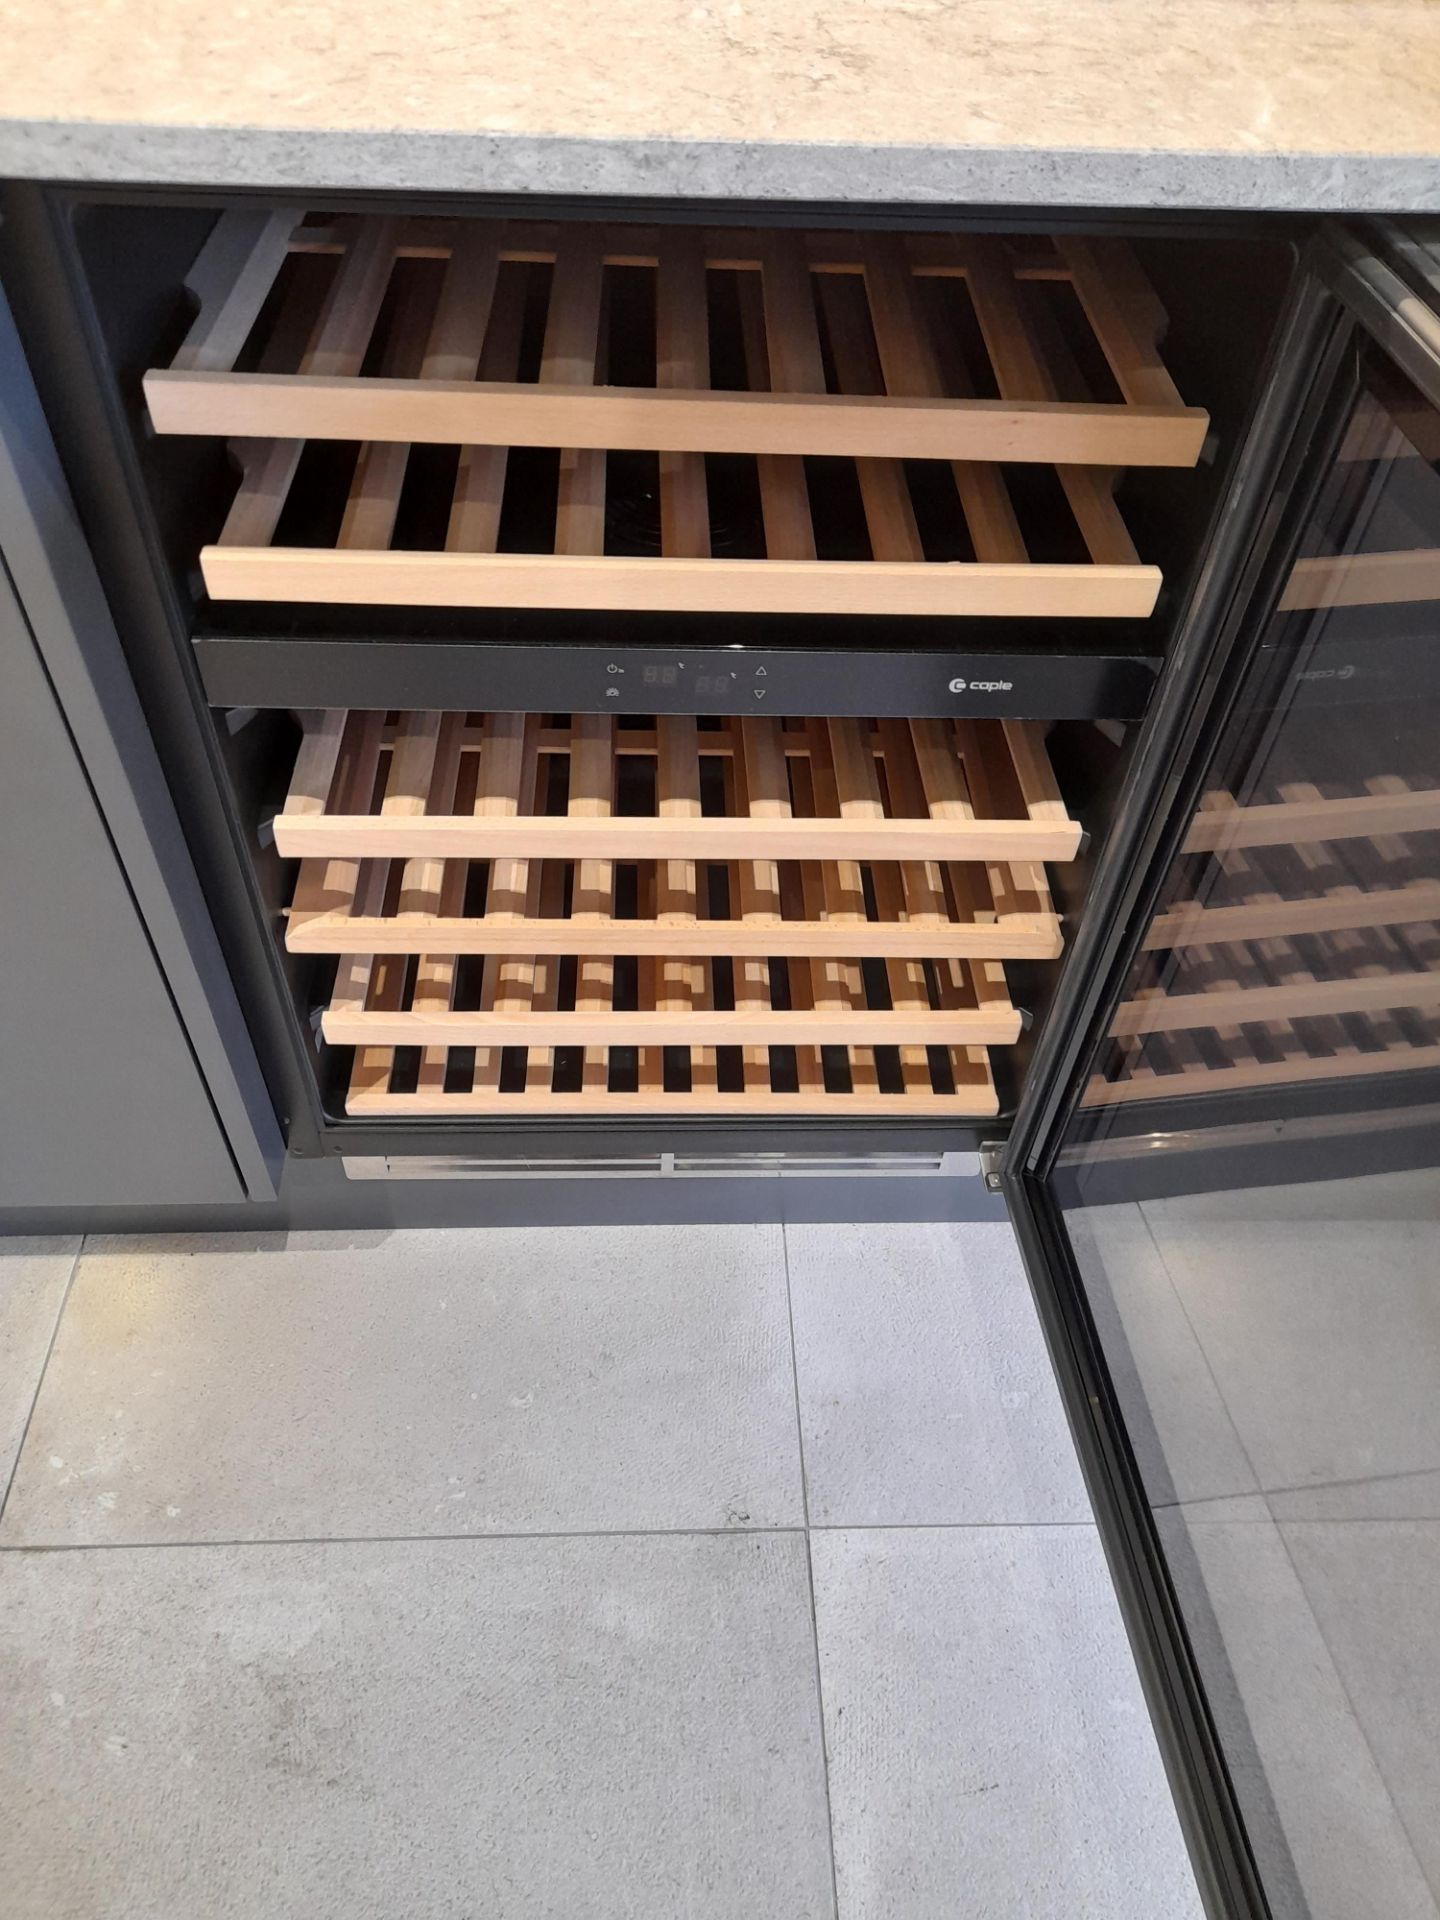 Caple integrated dual zone glazed wine cooler unit - Image 2 of 3